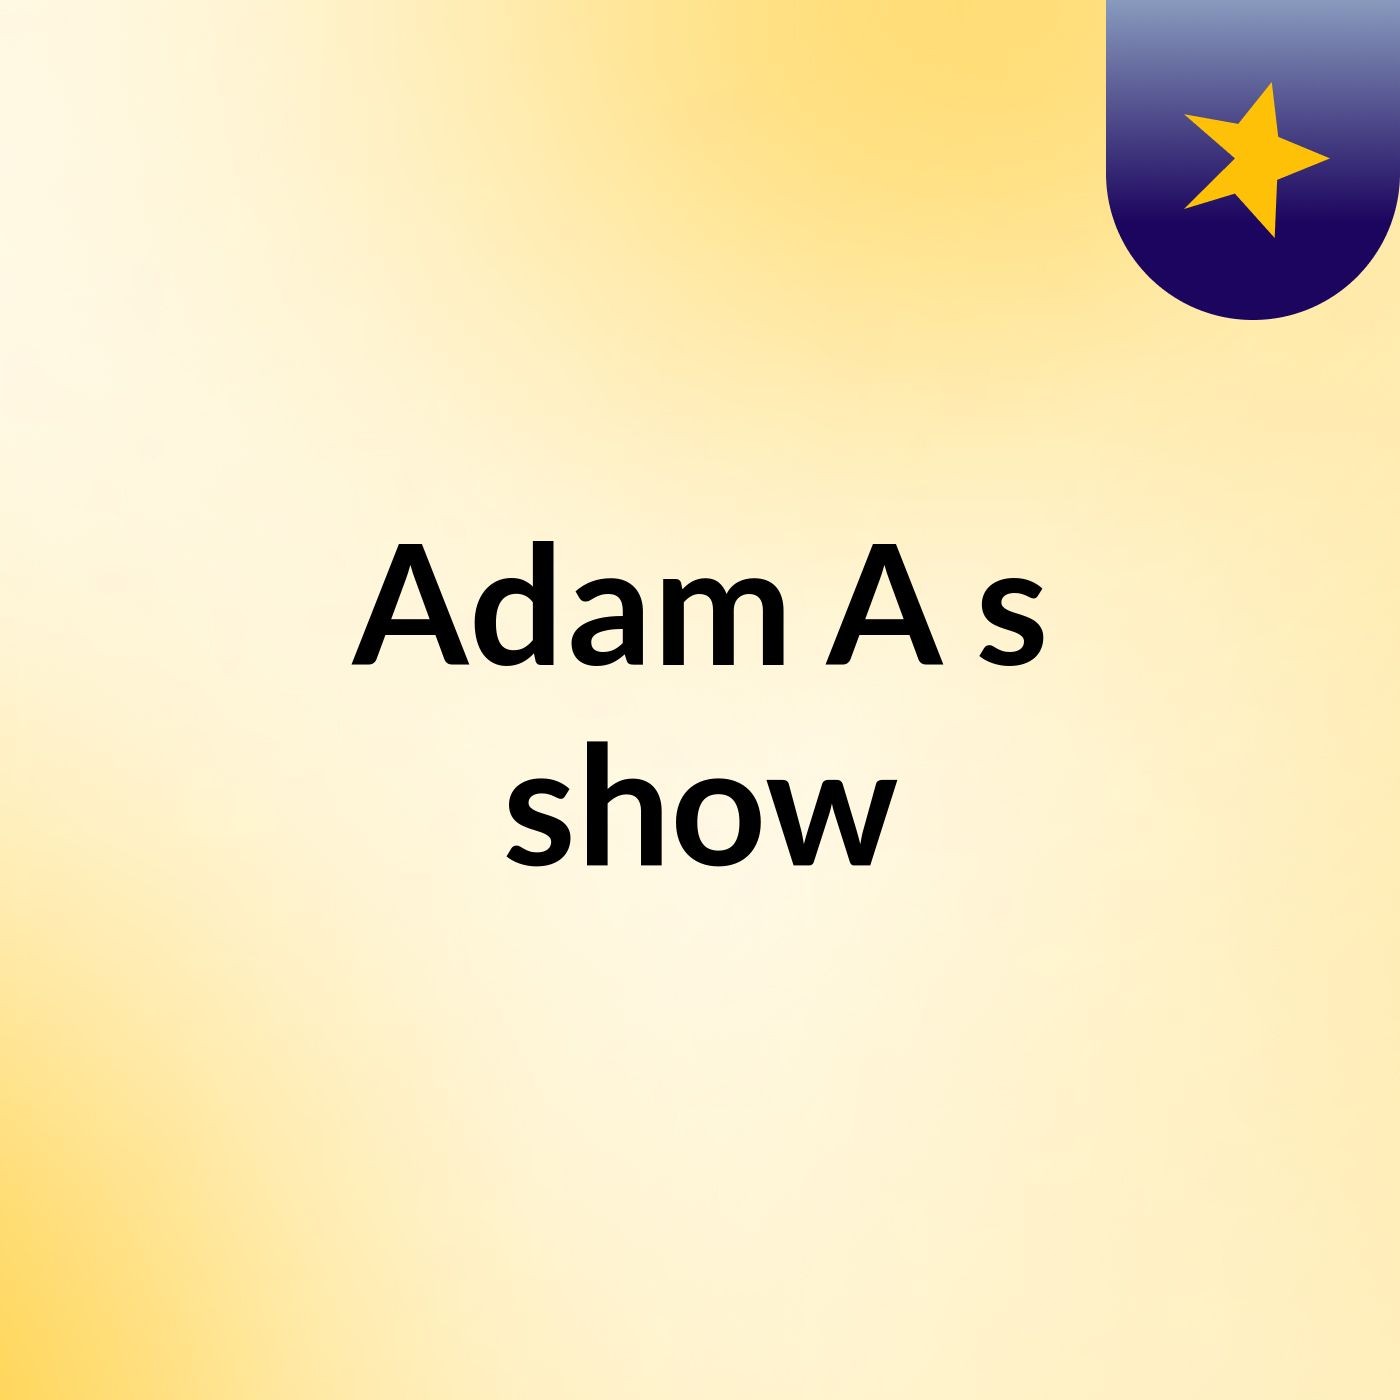 Adam A's show